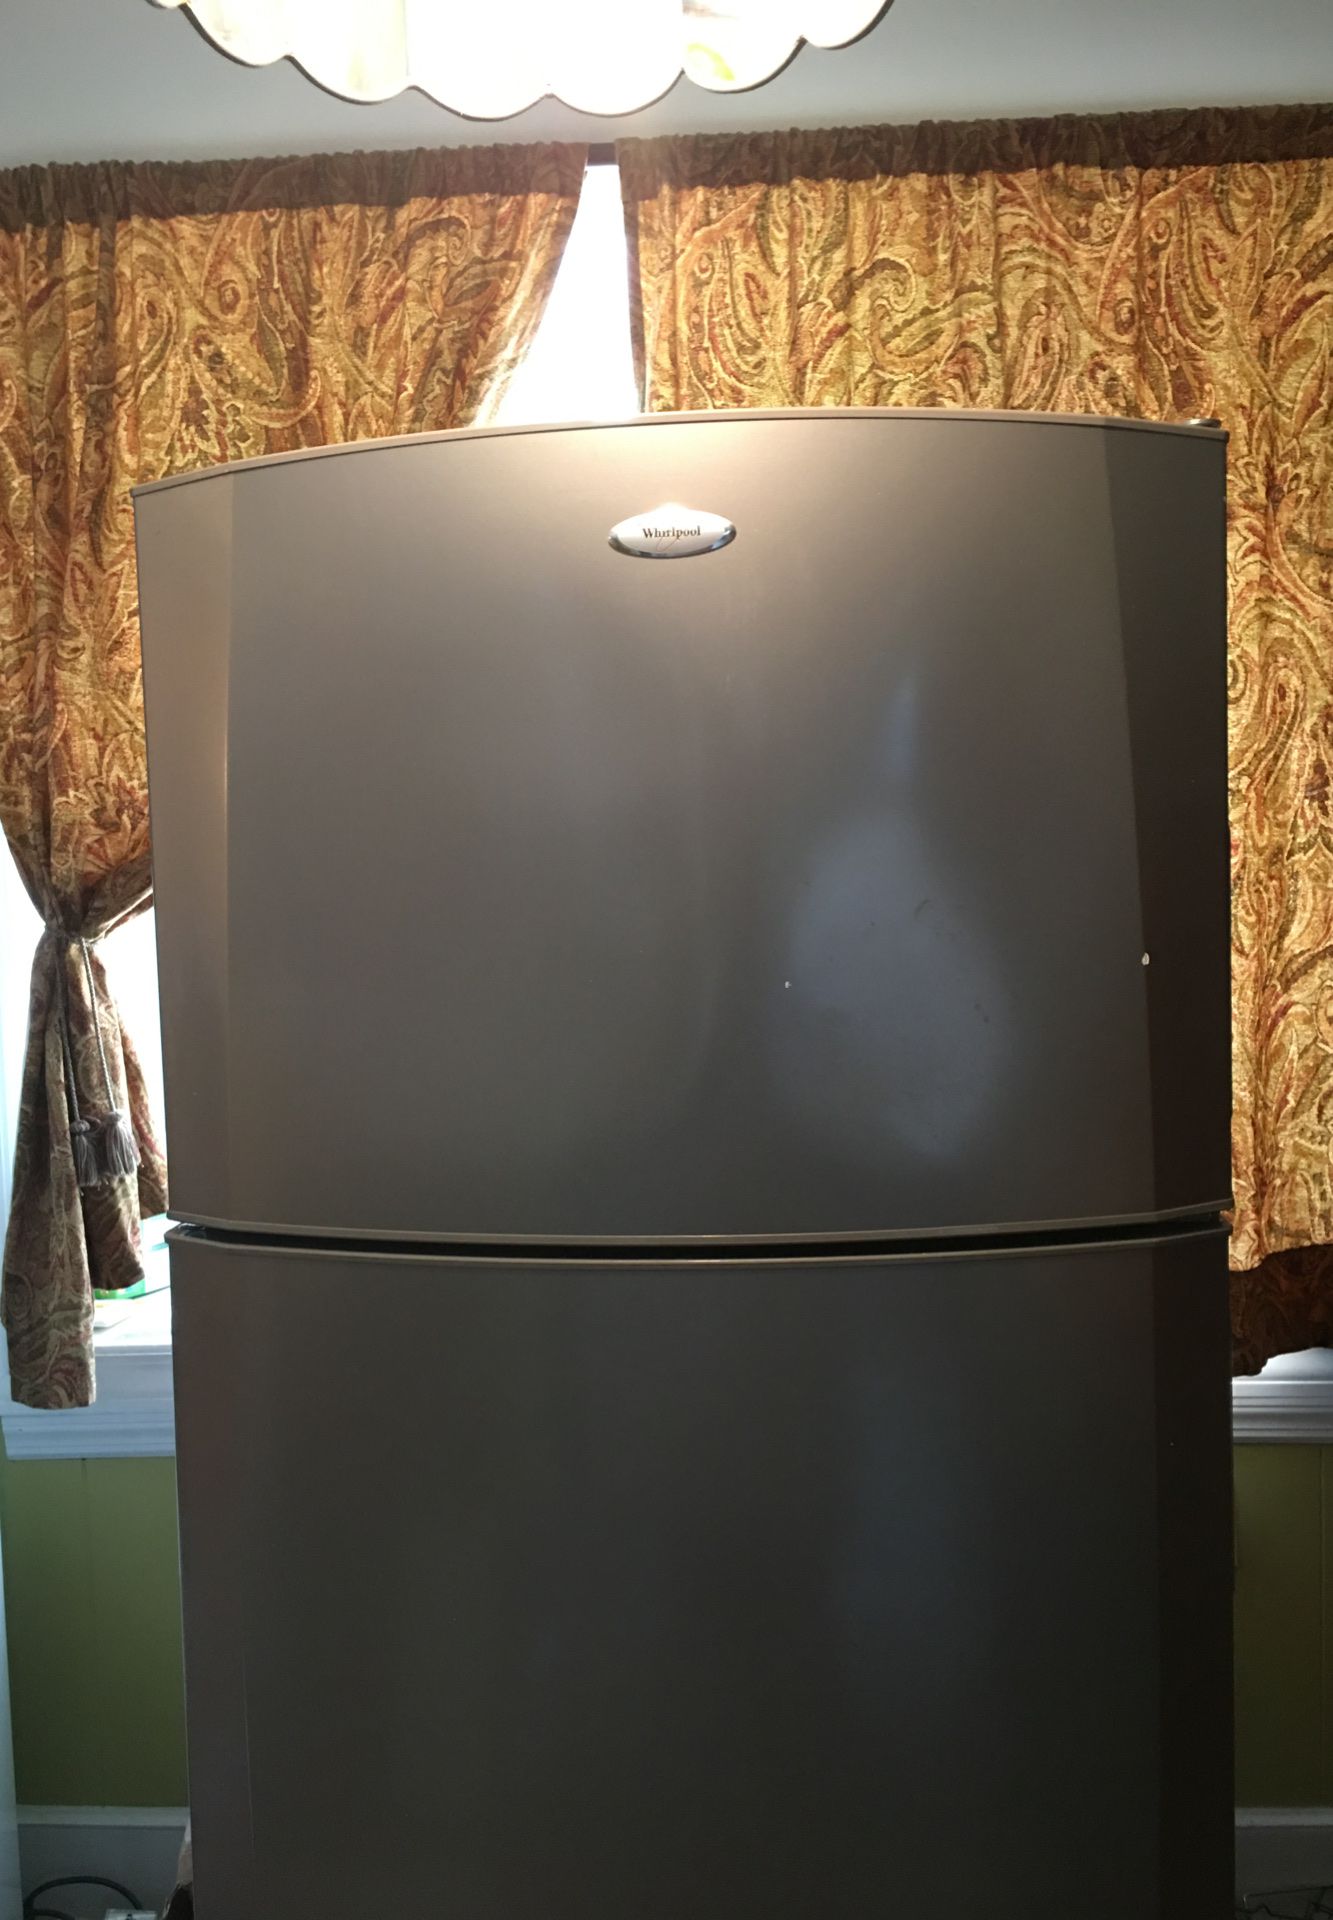 Whirlpool refrigerator, very clean. Cash-n-carry. Height 67.5” x width 28” x depth 29”.